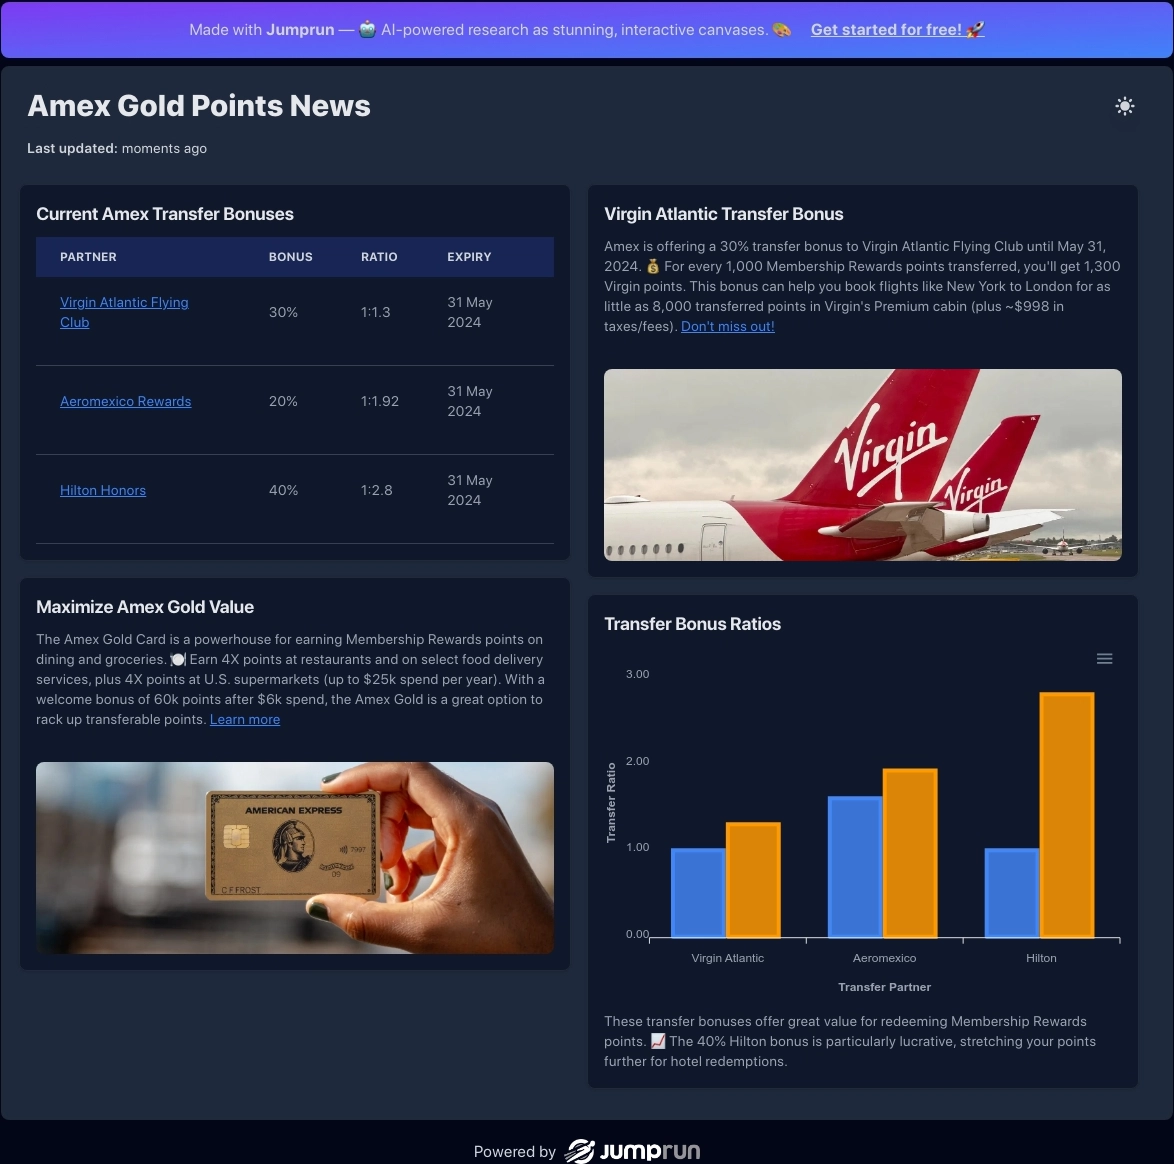 Maximize Amex Membership Rewards points with current transfer bonuses to Virgin Atlantic, Aeromexico, and Hilton.